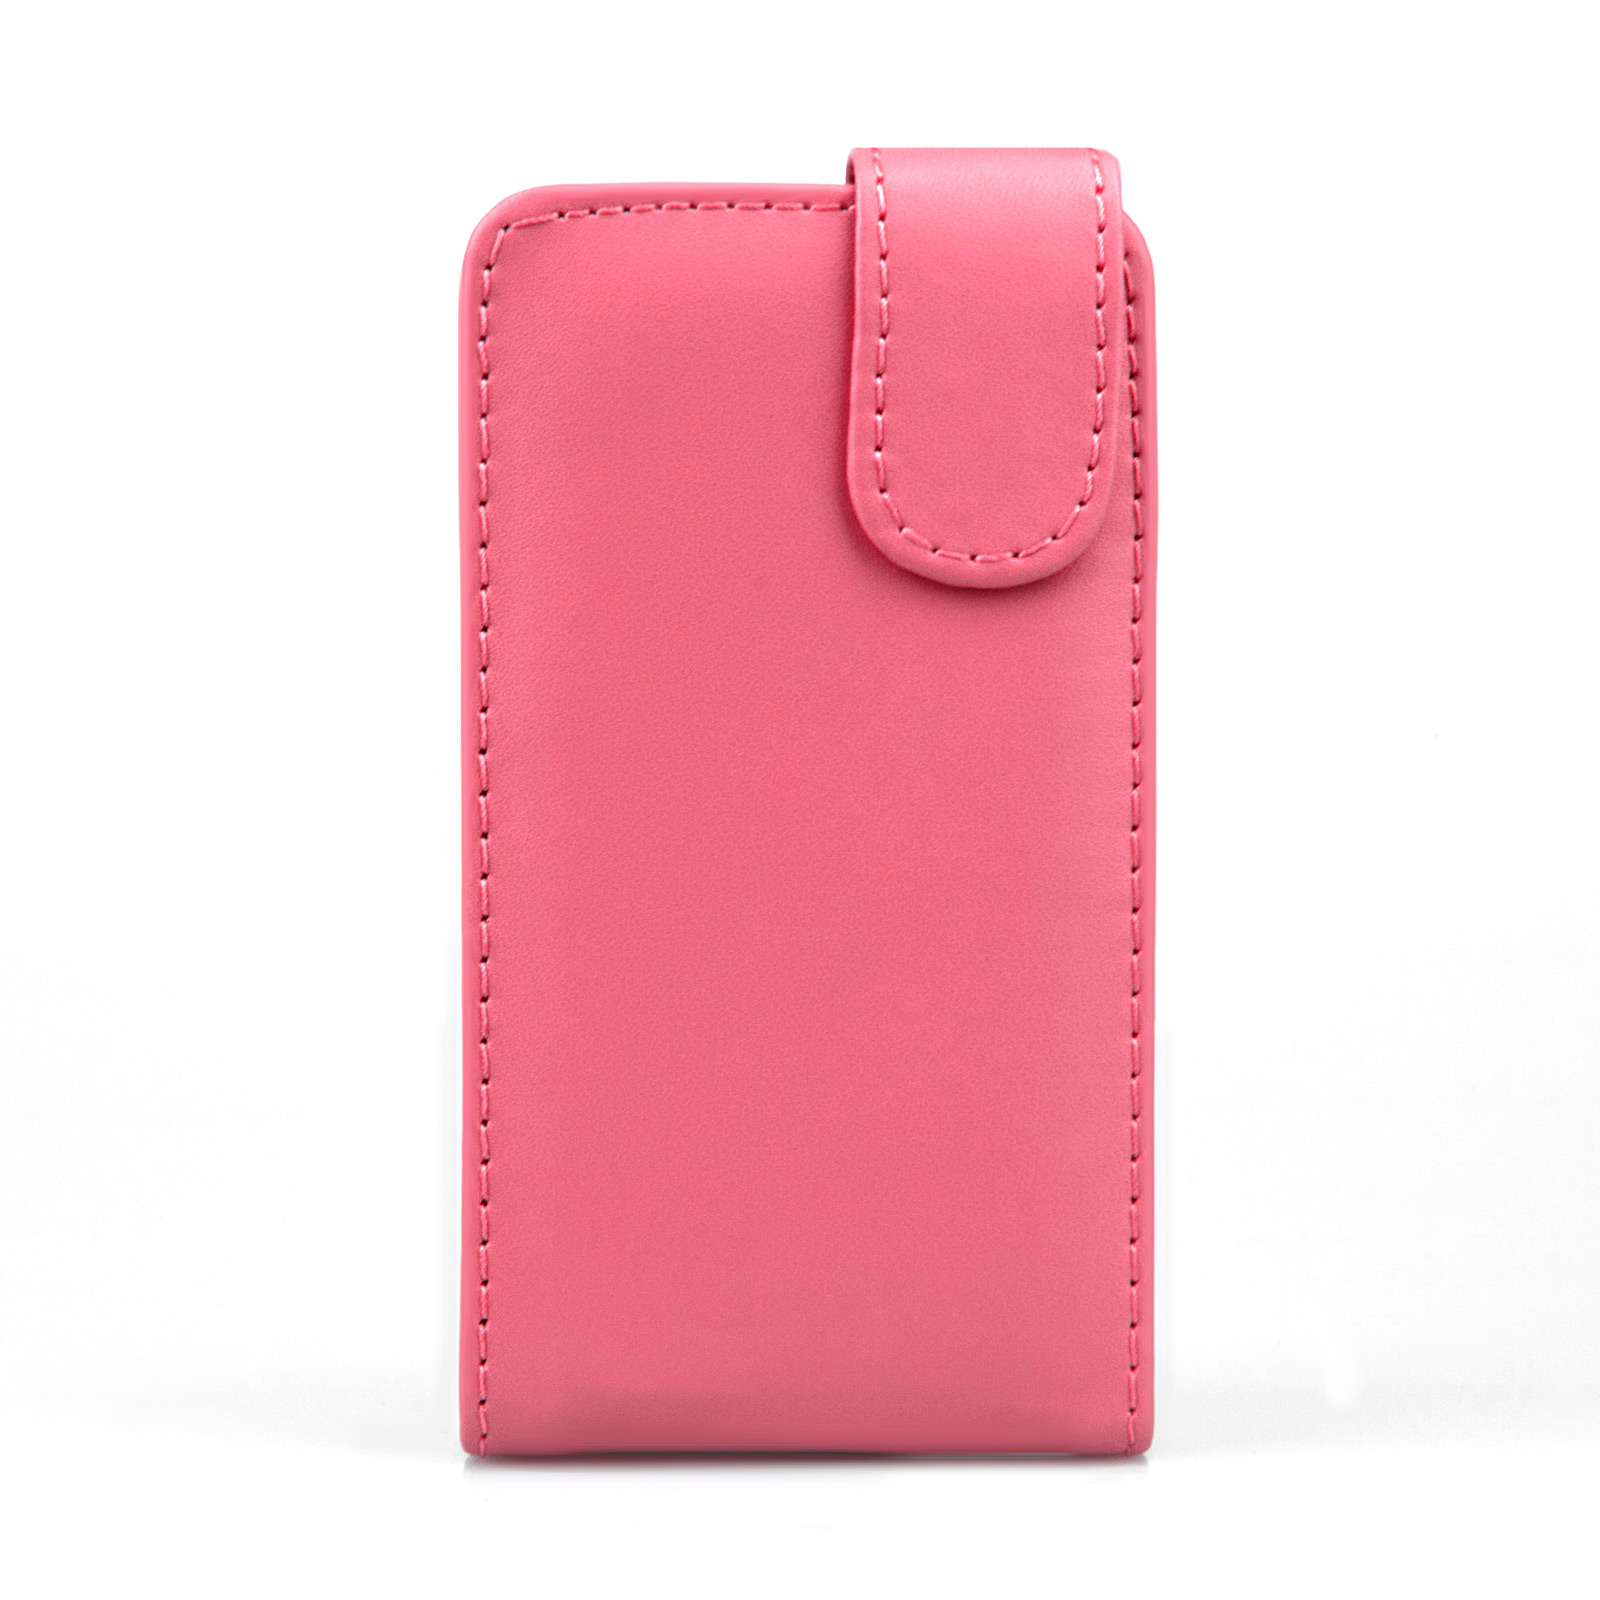 YouSave Nokia Lumia 530 Flip Case - Hot Pink | Mobile M